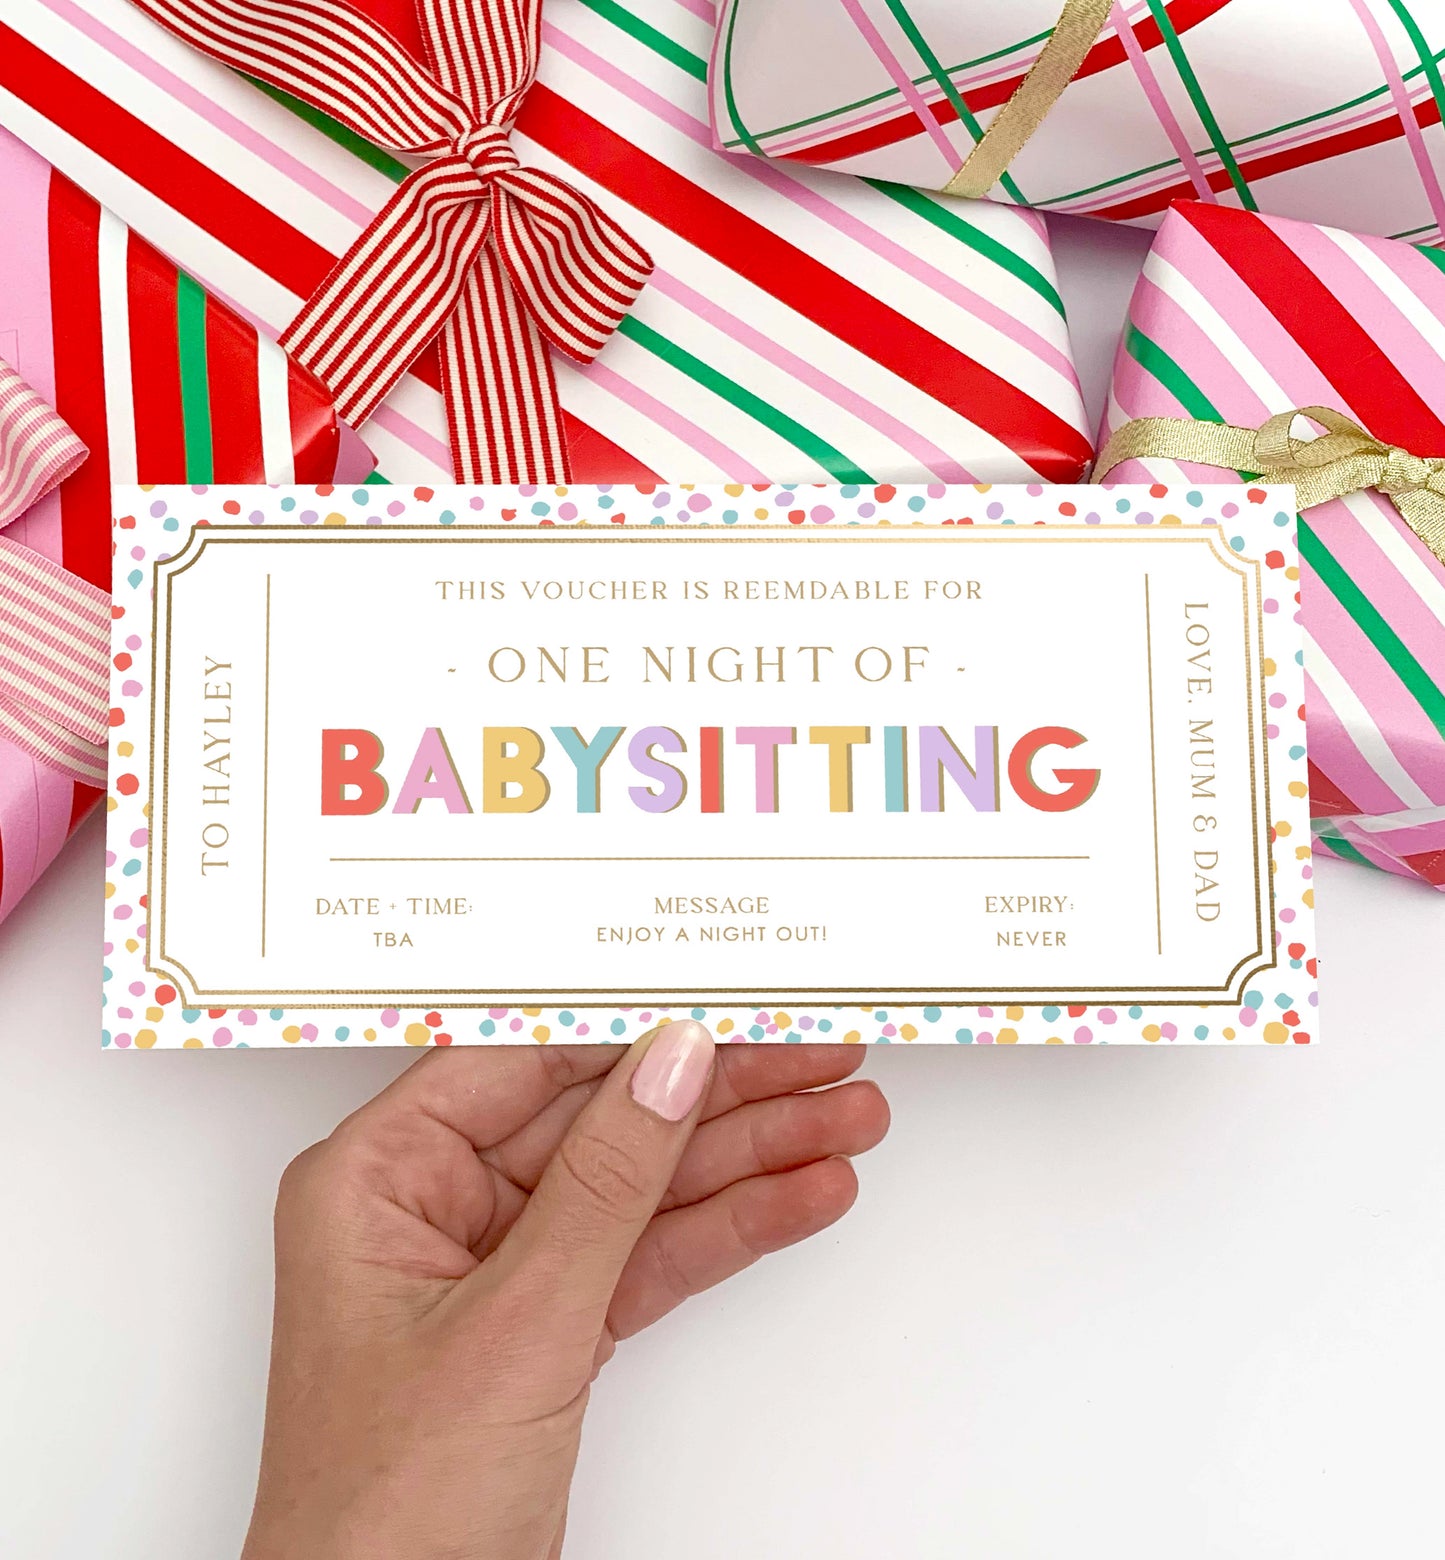 Babysitting Gift Voucher Template, Printable Babysitting Gift Certificate, Babysitting Coupon, Childminding Date Night Voucher, Multi Dot